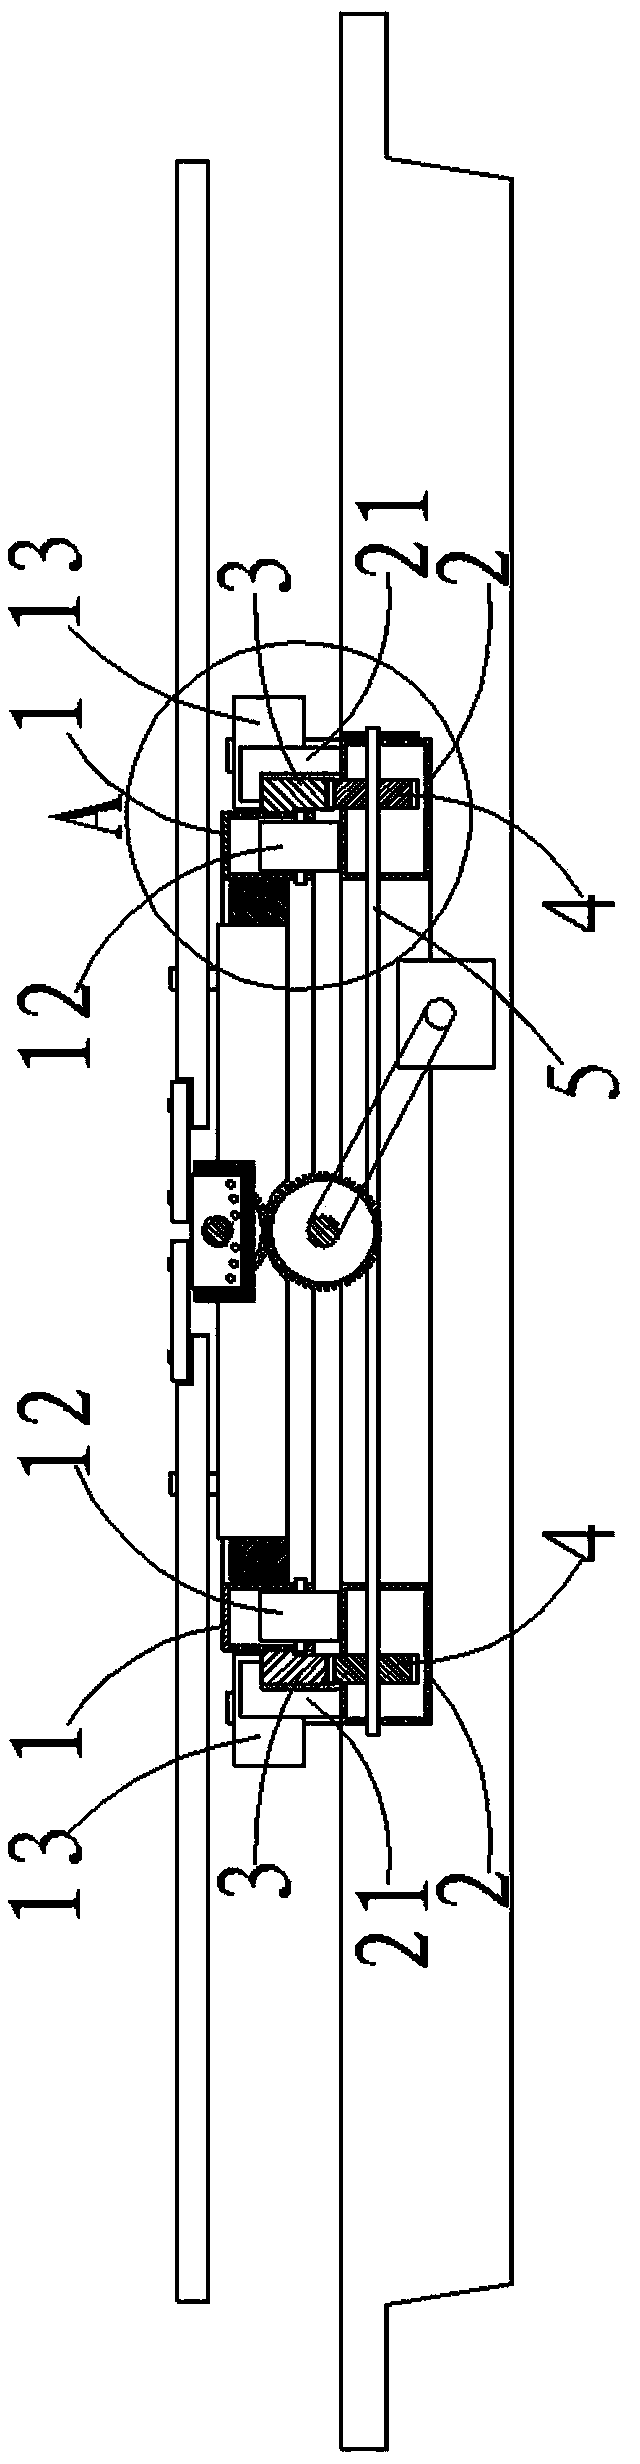 Horizontal platform joining mechanism for mechanical garage